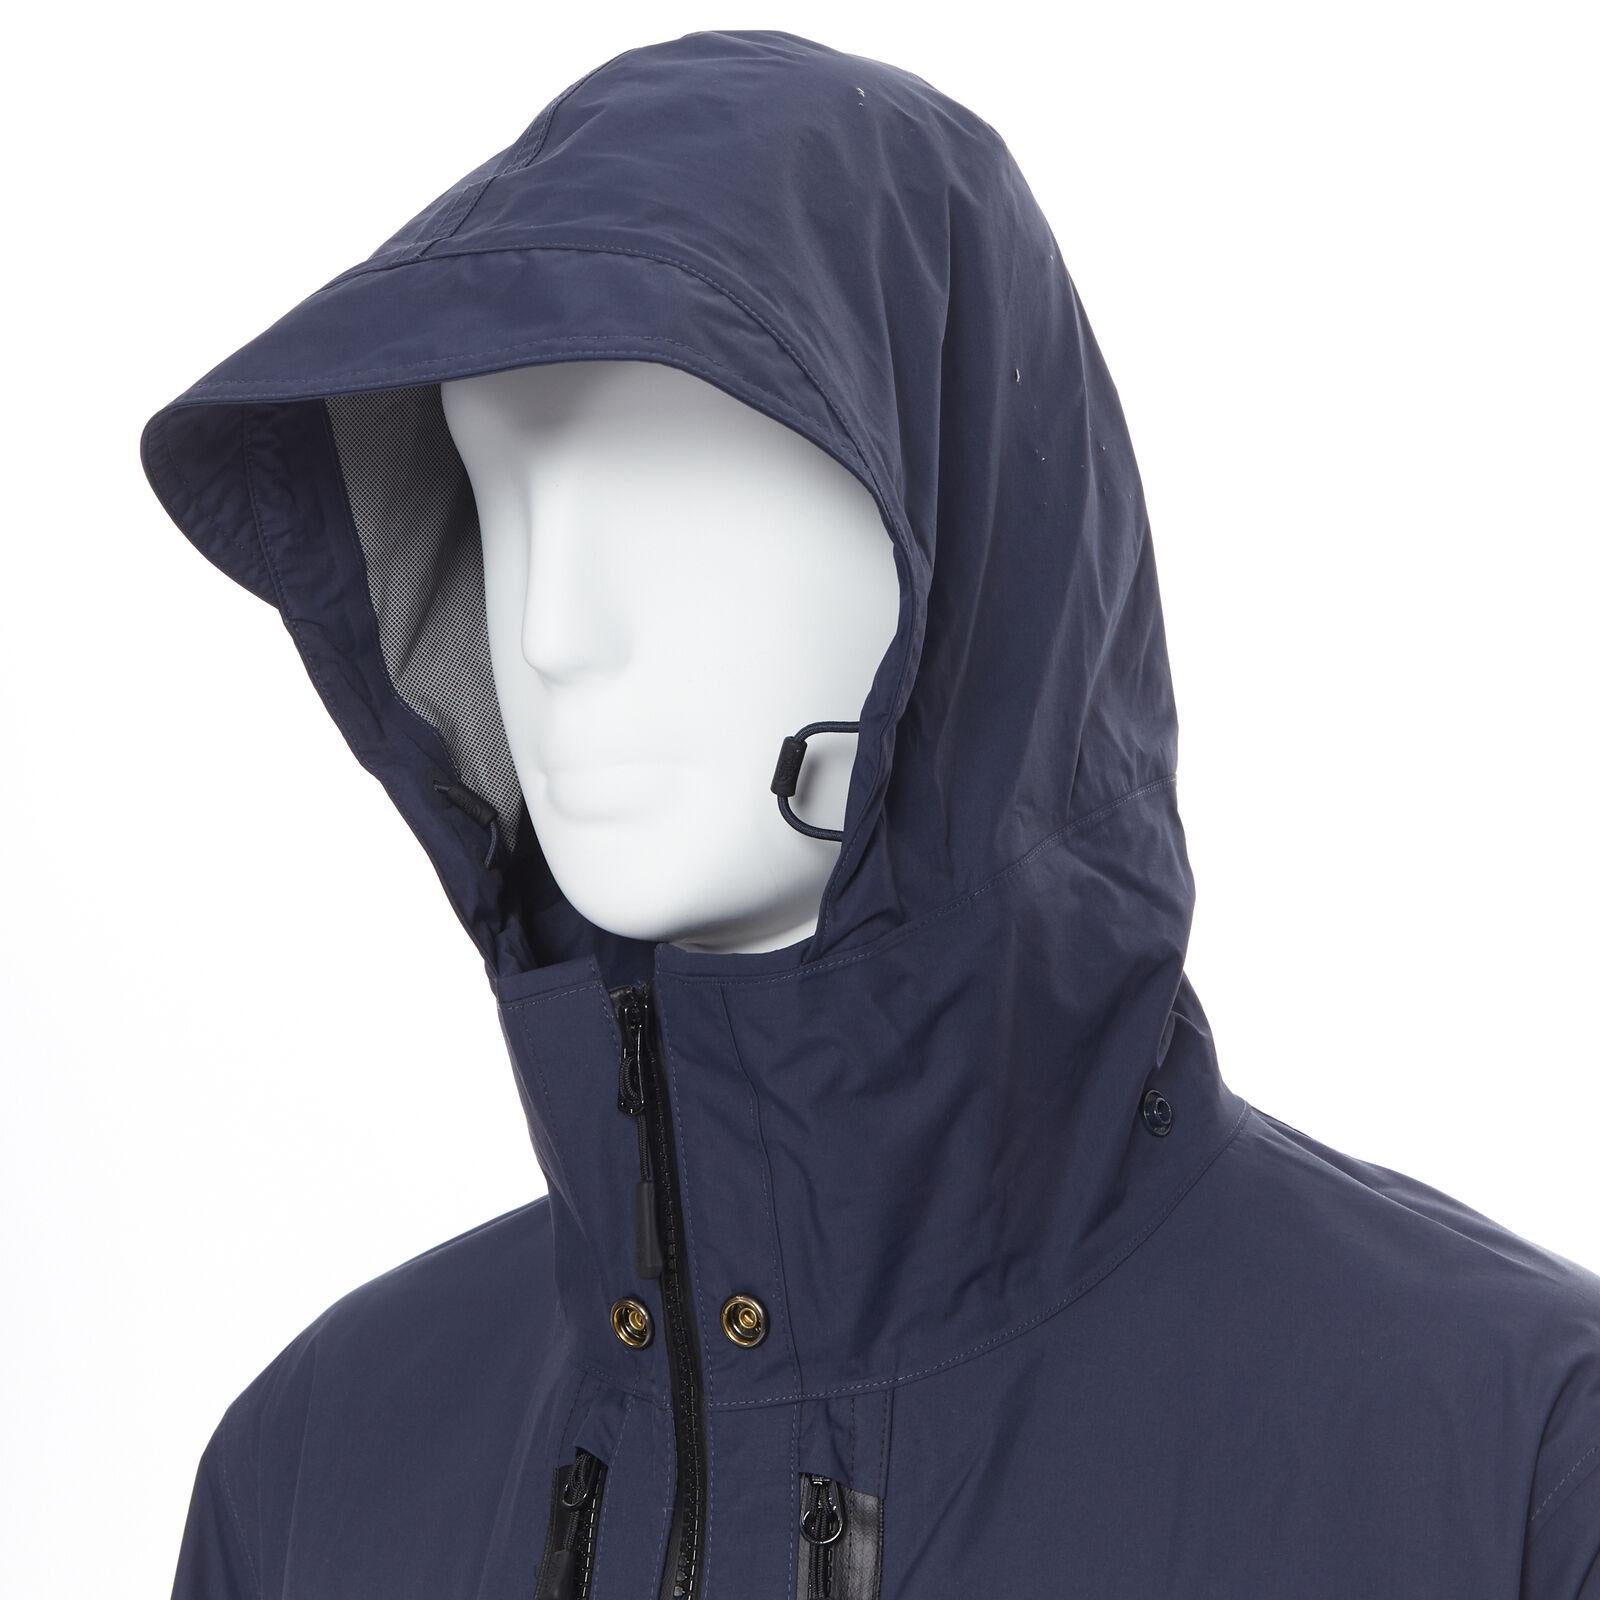 new THE NORTH FACE Black Series KK Urban Explore navy utility pocket jacket L XL For Sale 4